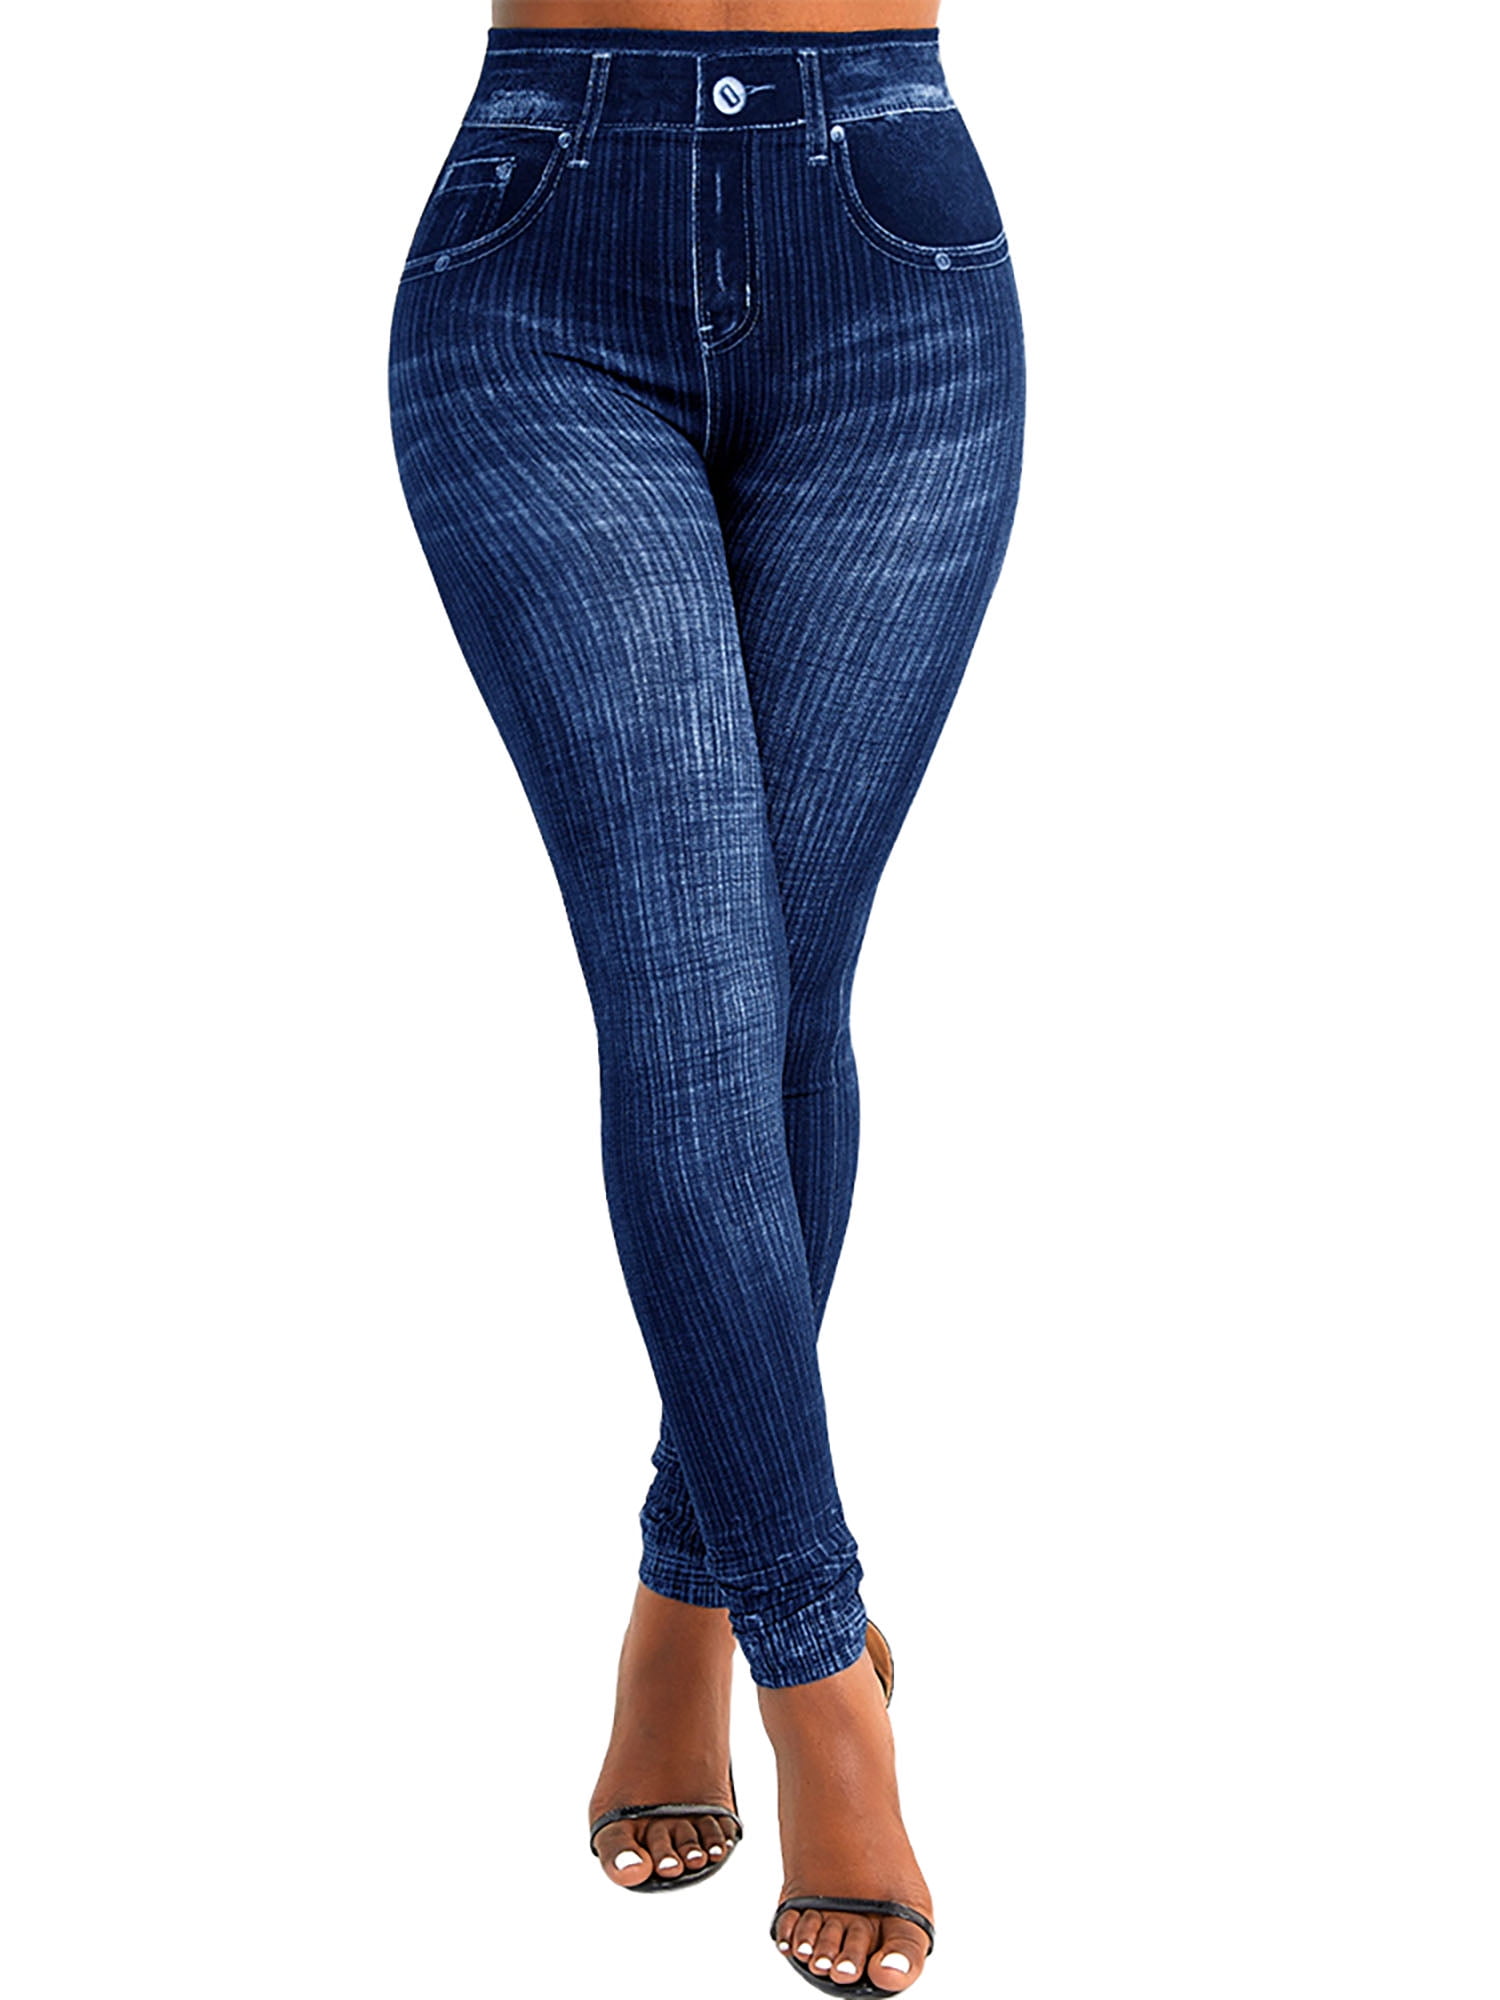 FASHIONWT Women High-Rise Faux Denim Jeans Skinny Stretchy Leggings  Jeggings 